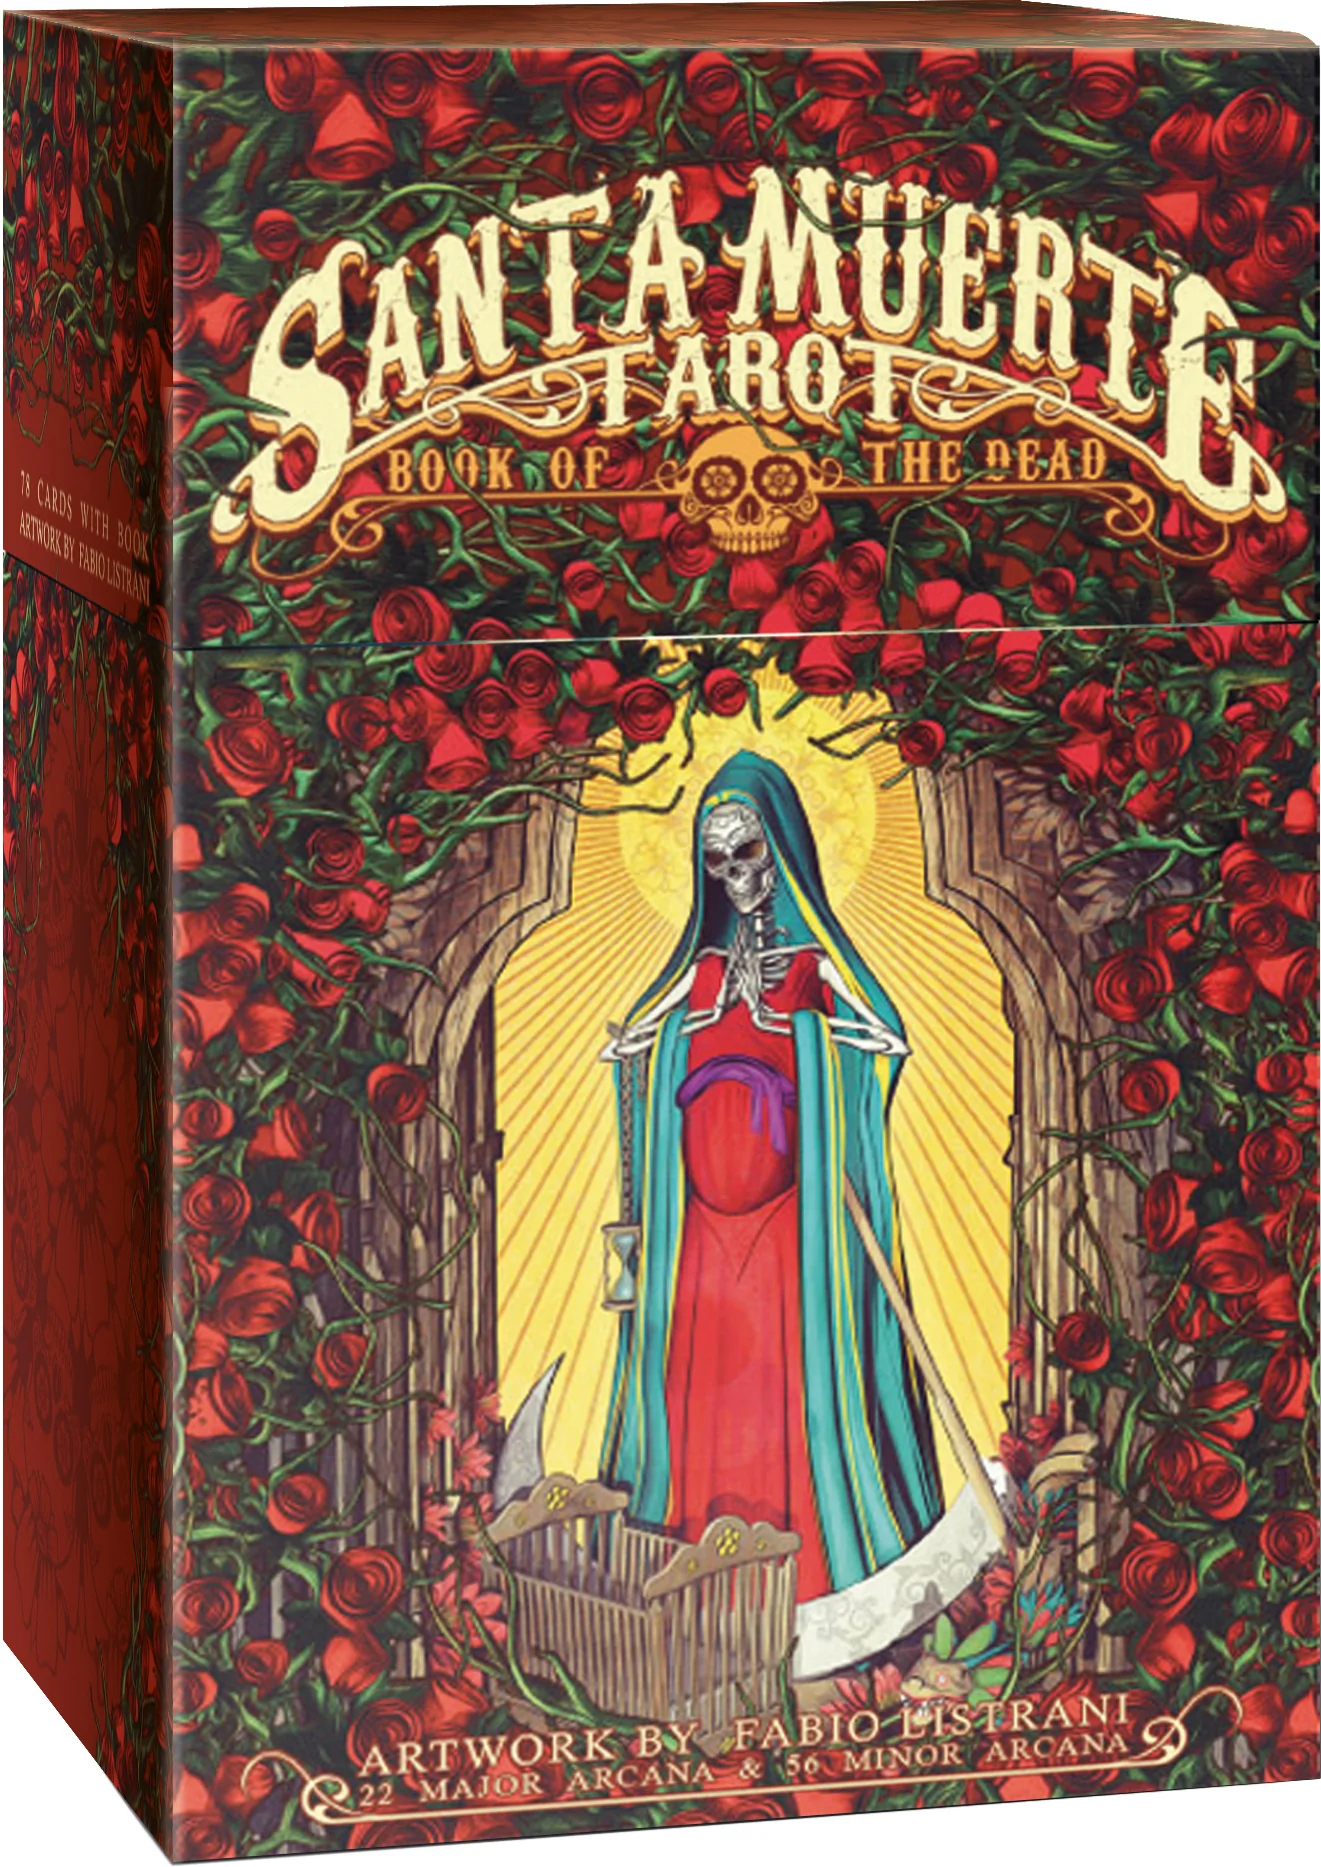 A box of Santa Muerte Tarot by Fabio Listrani